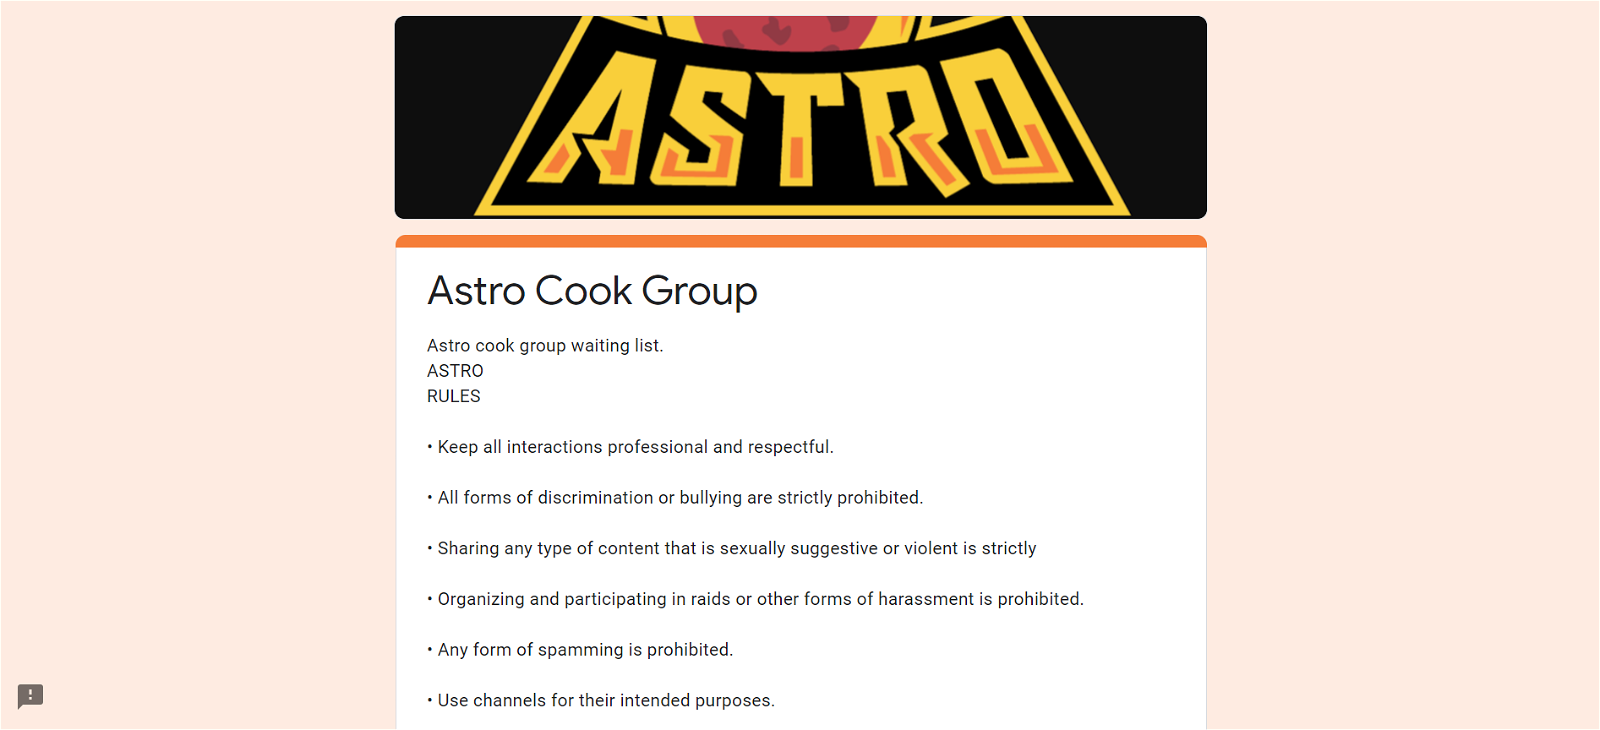 Astro cook group presentation banner